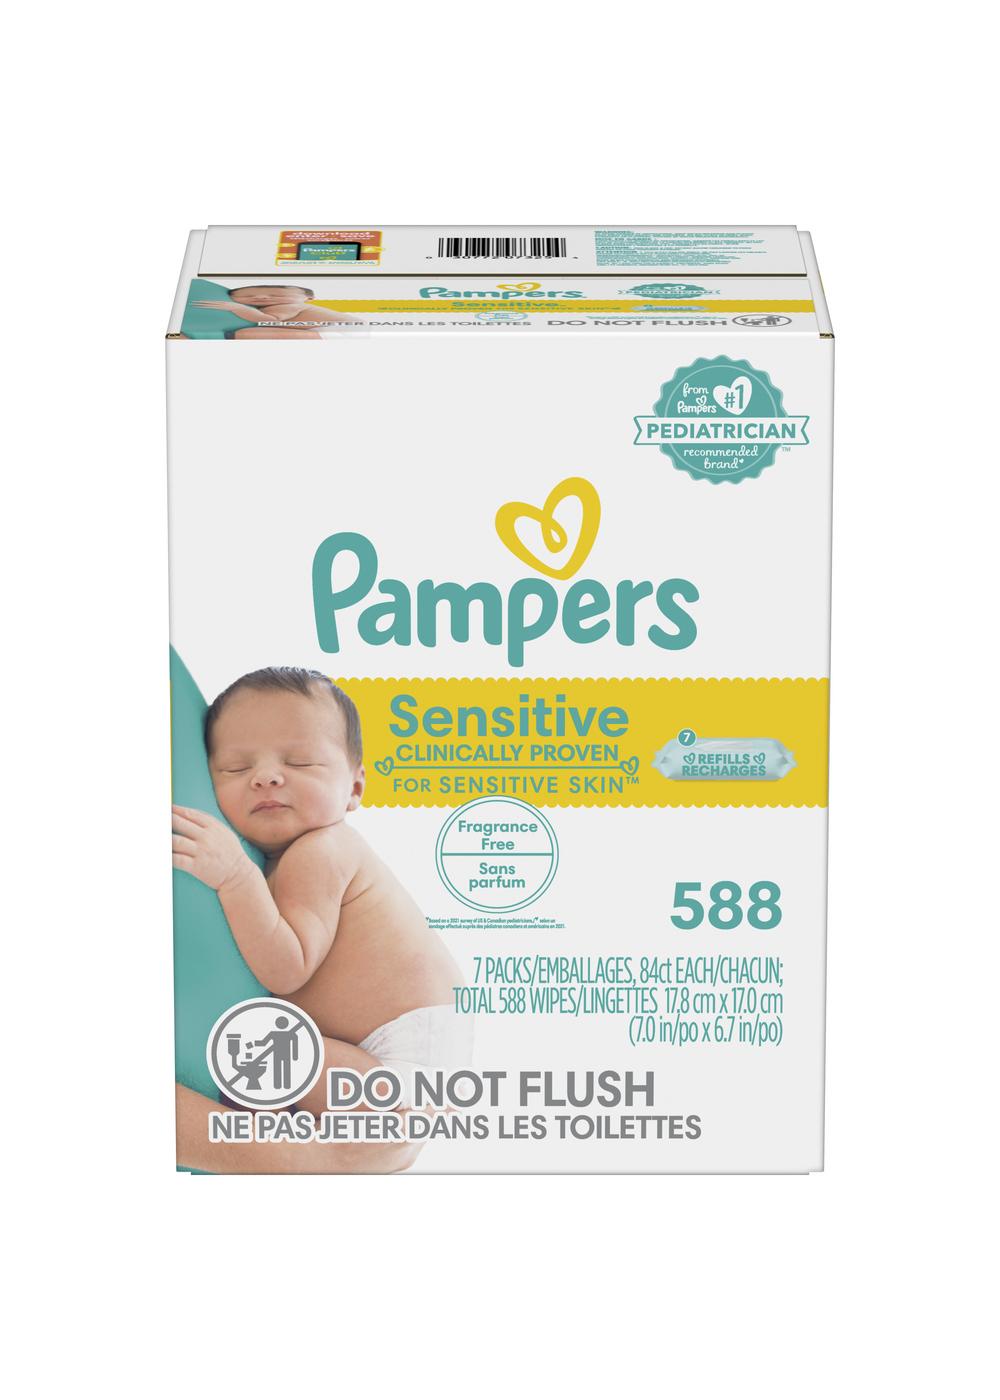 Pampers Sensitive Skin Baby Wipes Refills 7 Pk; image 1 of 10